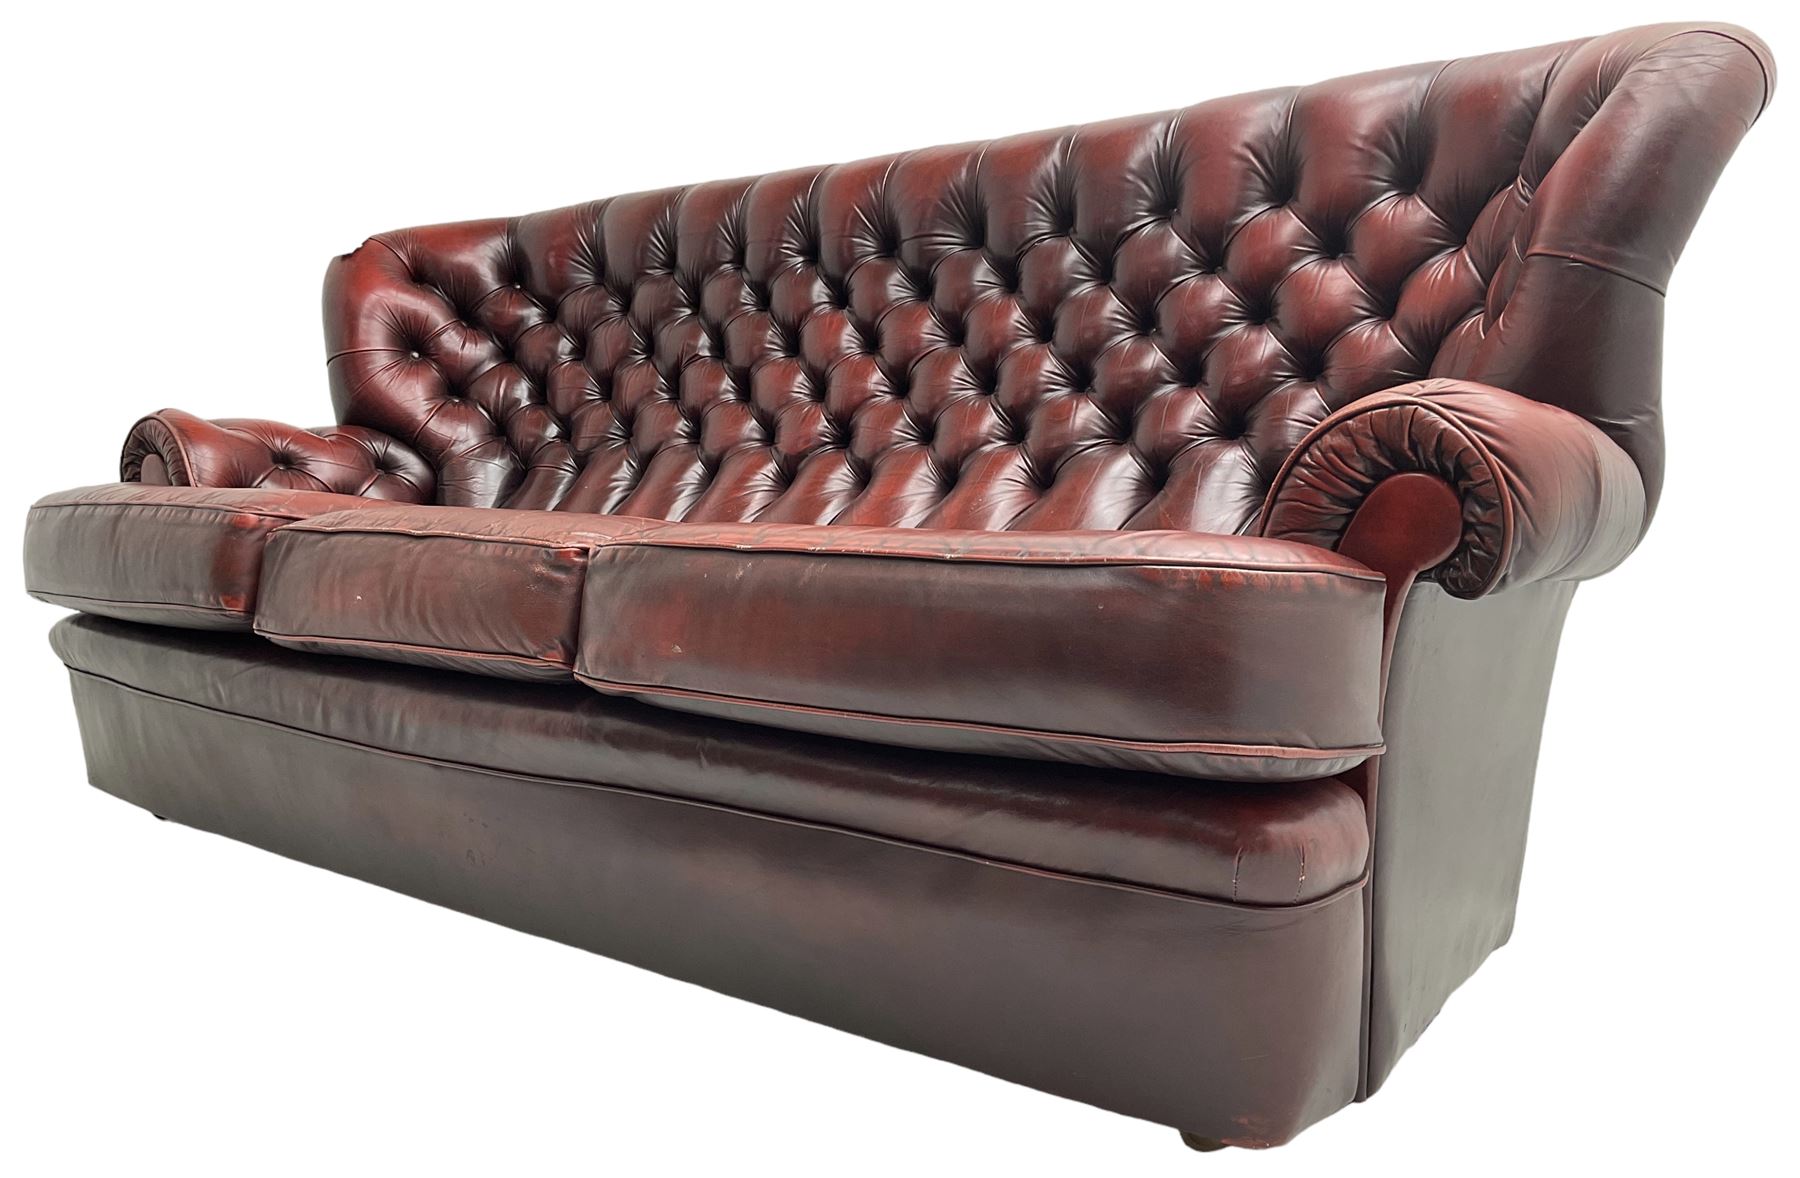 Wade - Georgian design three-seat sofa - Image 2 of 8